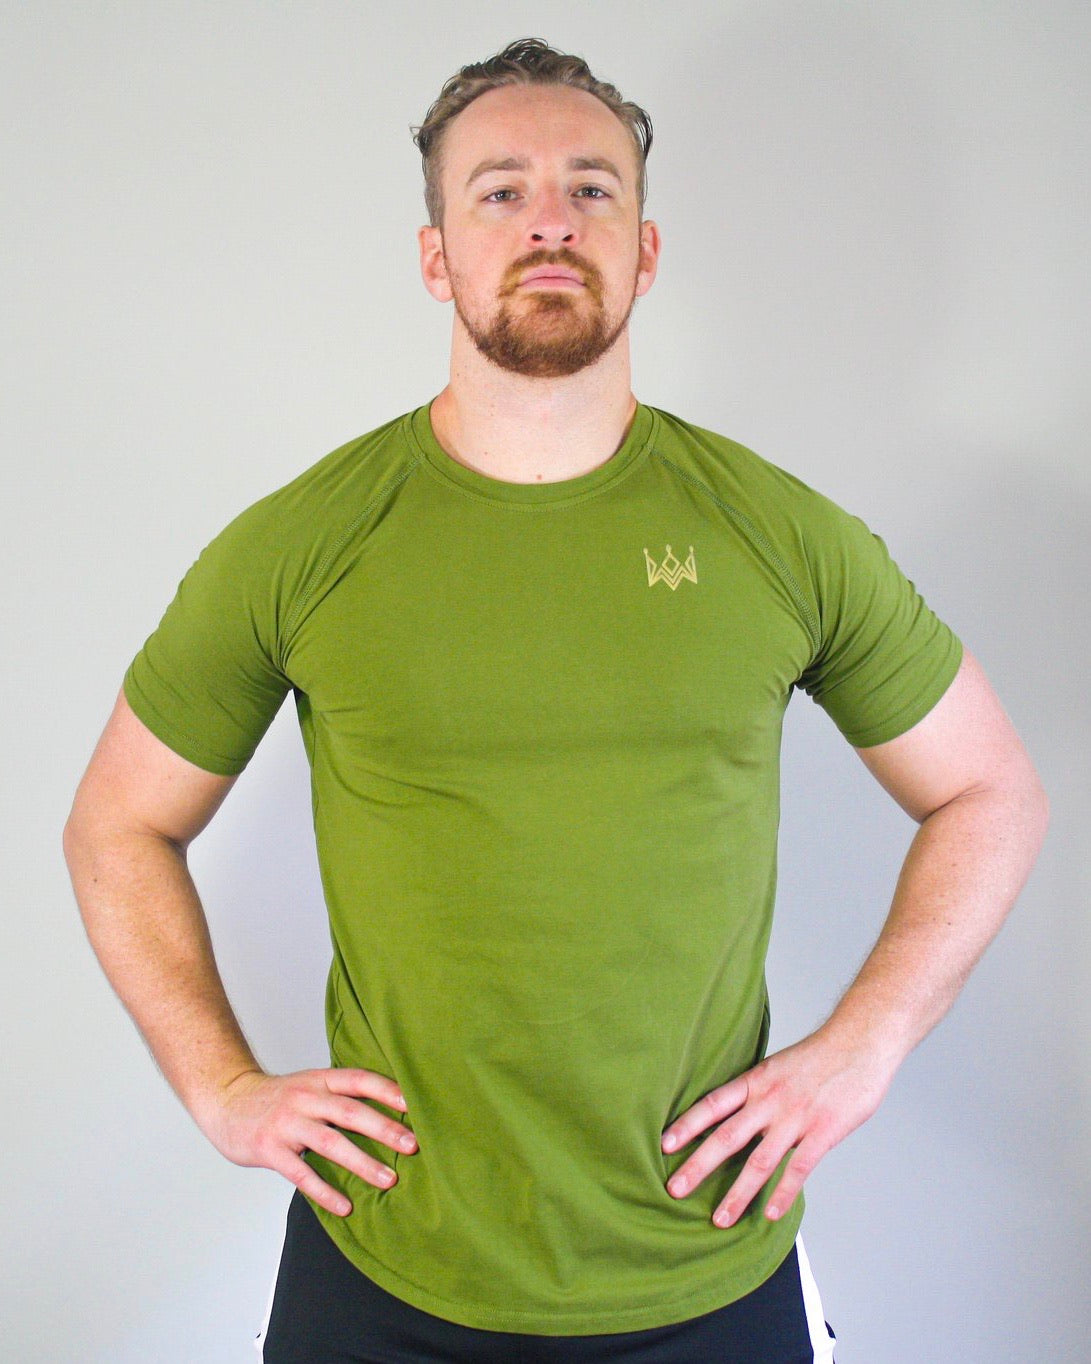 Tunic Performance Shirt - Olive Green